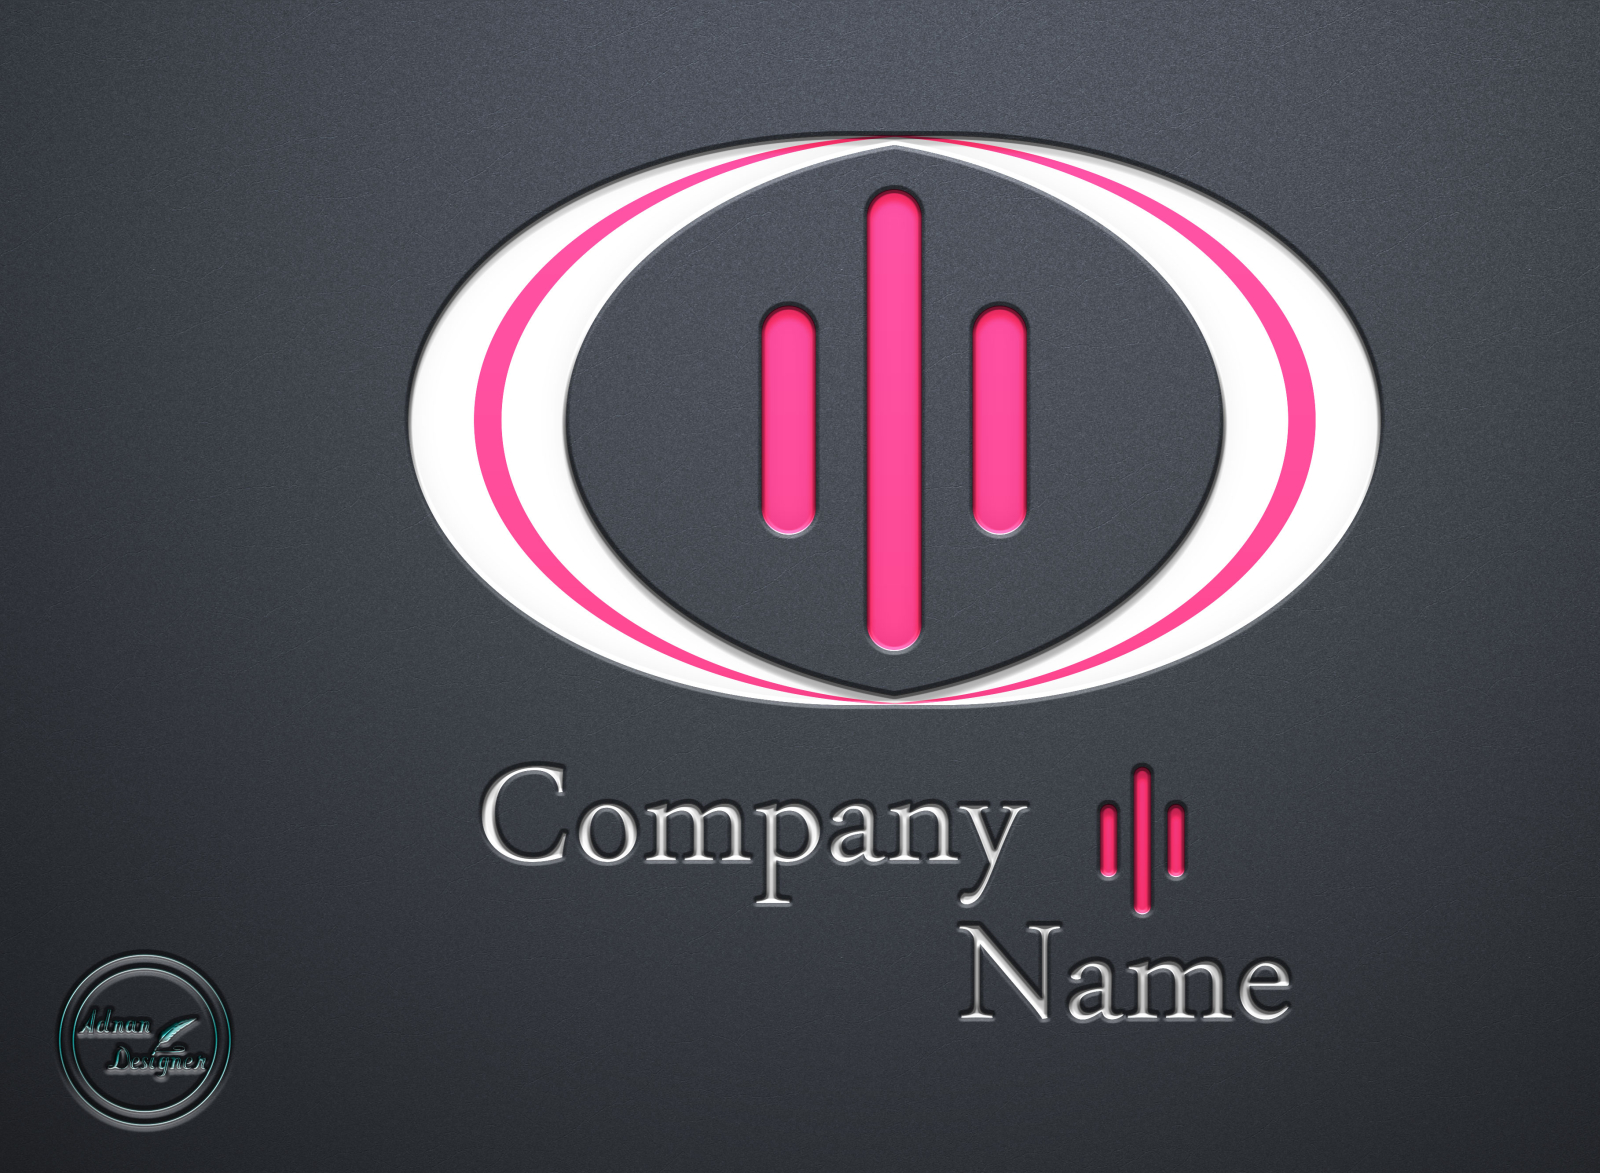 Professional, Serious, Insurance Logo Design for Komperda Insurance Group  by Adnan Bhatti | Design #31850486